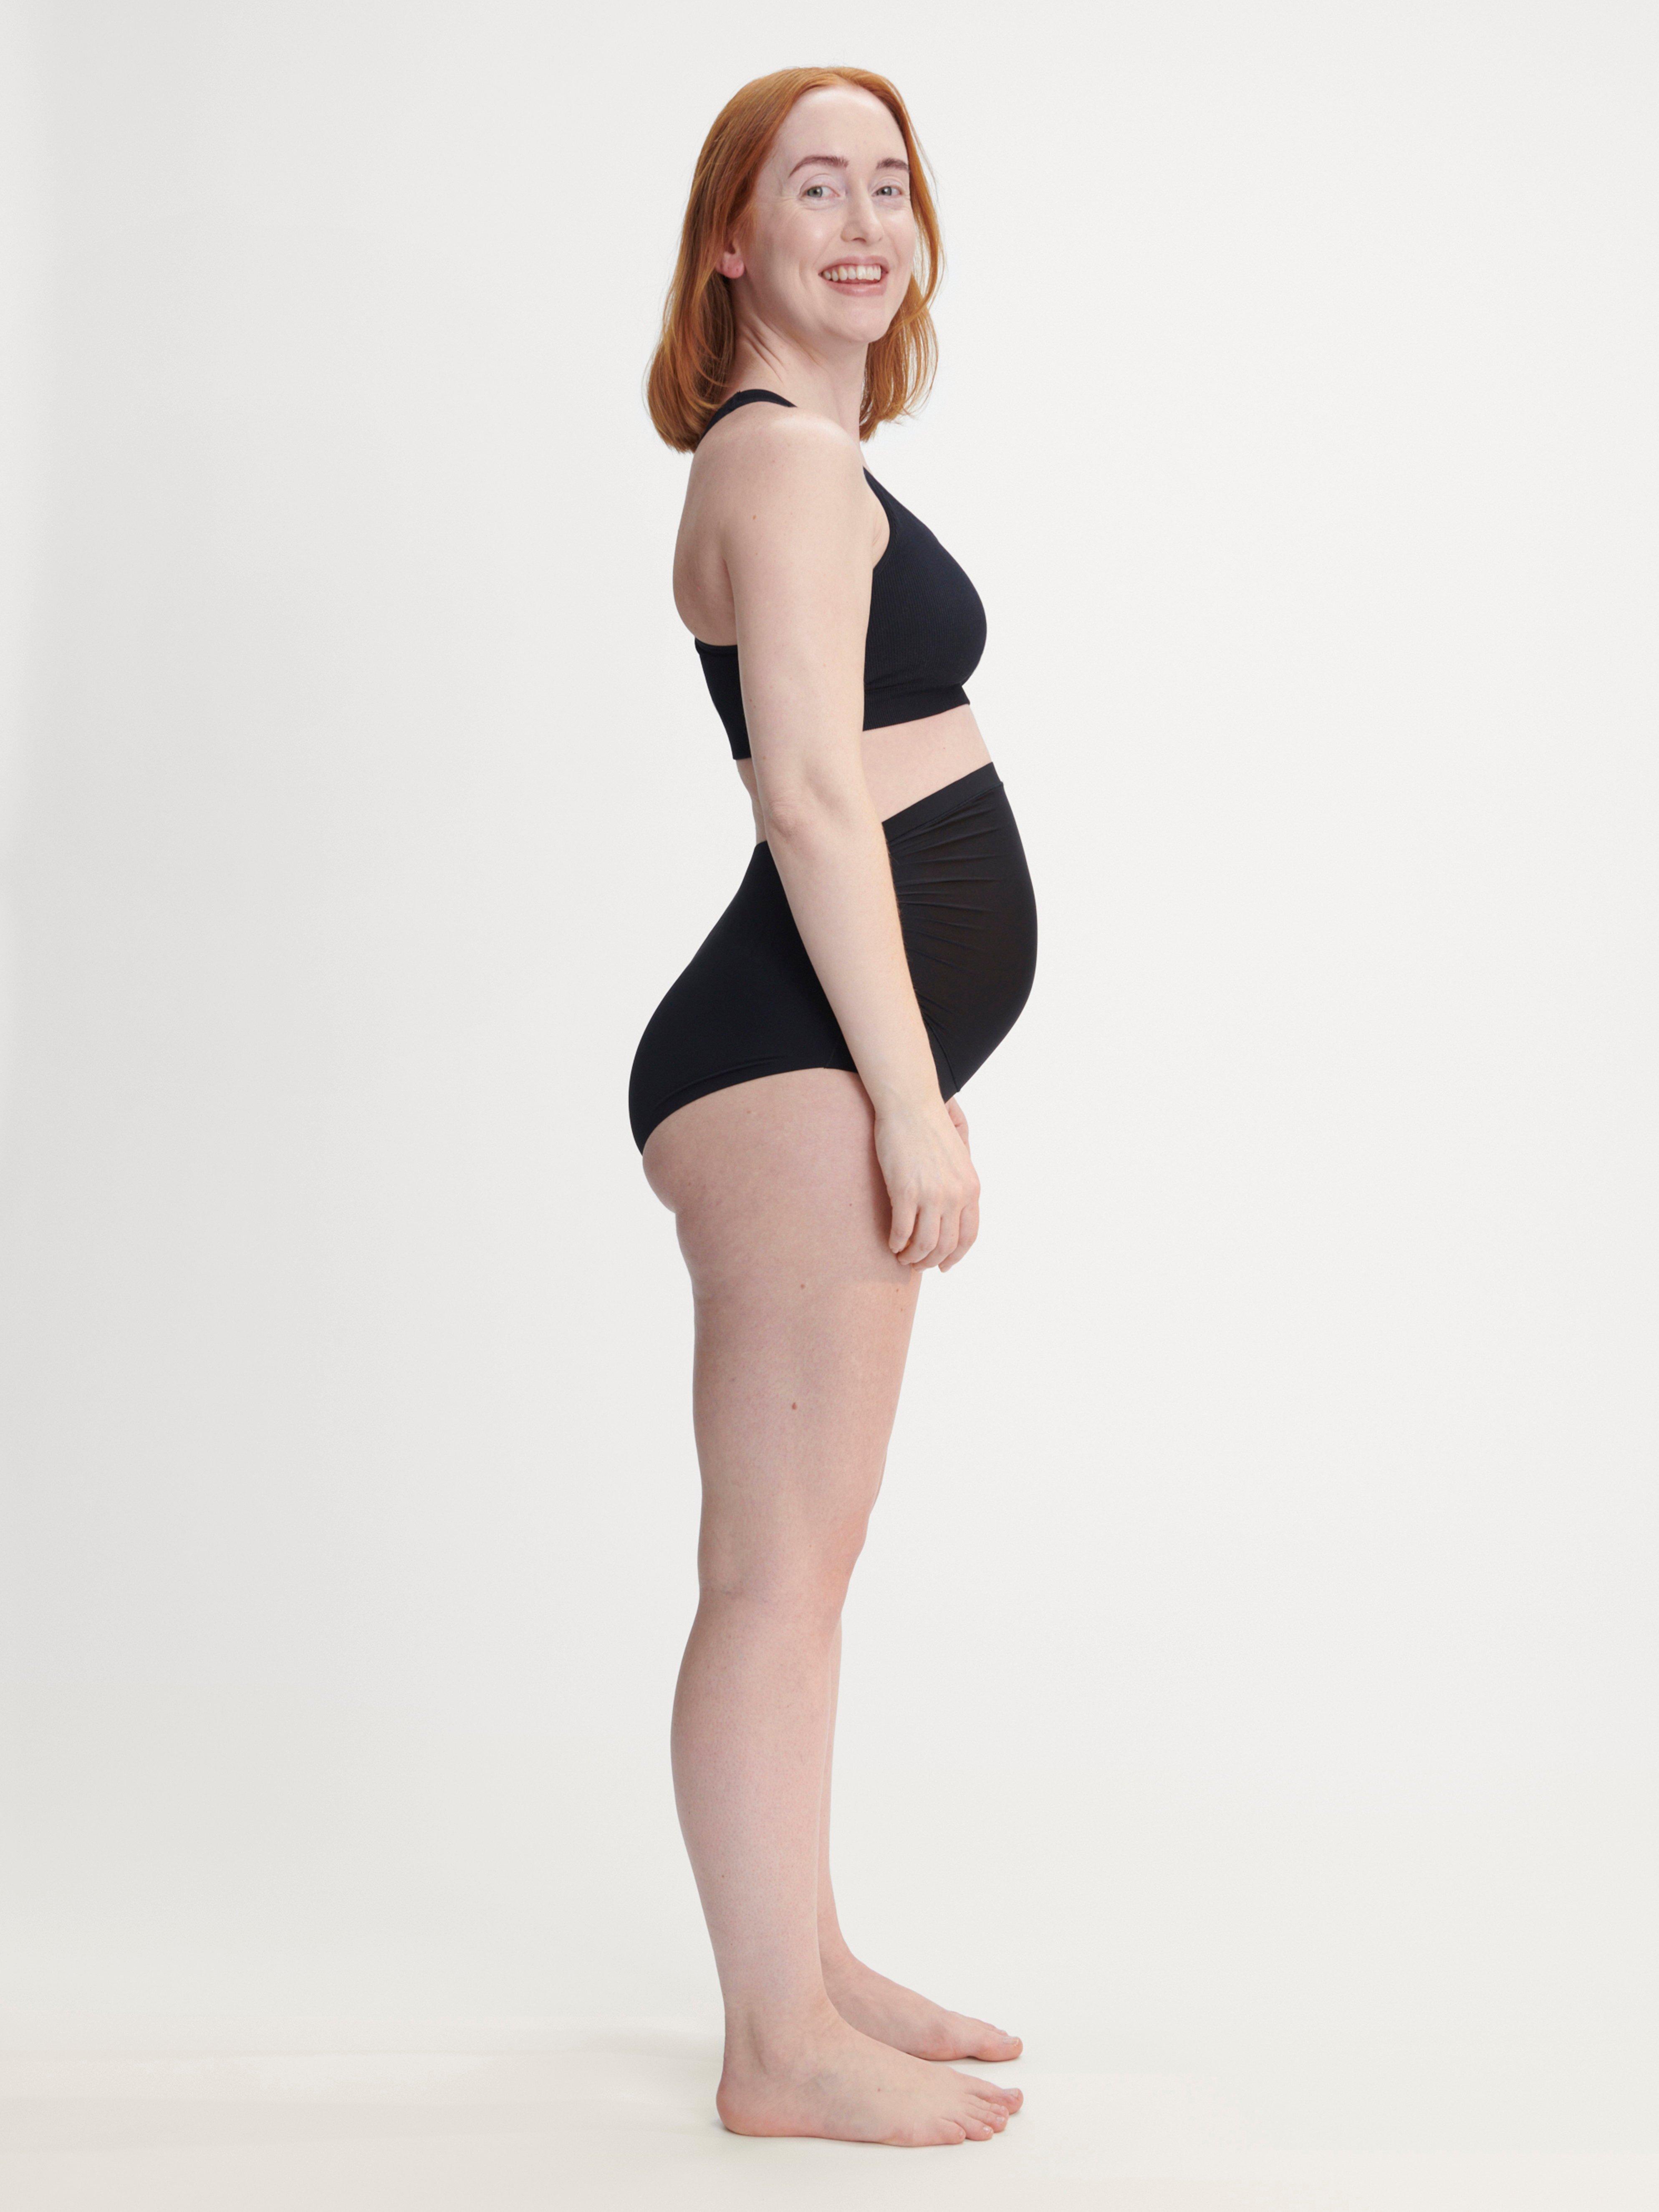 Maternity Underwear Medium Absorbency - High Waist - Female Engineering